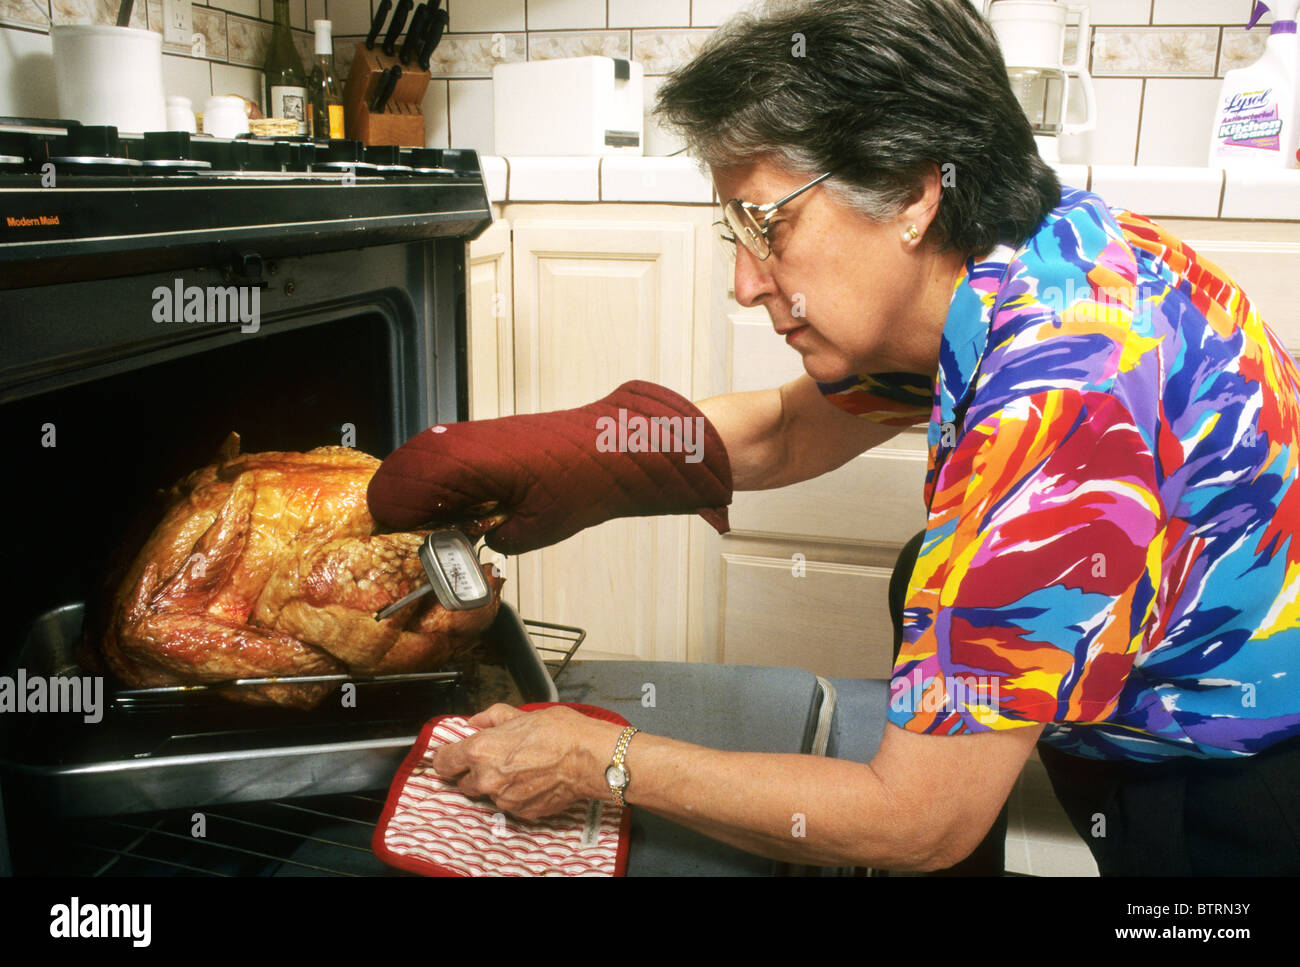 https://c8.alamy.com/comp/BTRN3Y/lone-hispanic-woman-check-temperature-turkey-oven-hot-heat-doneness-BTRN3Y.jpg